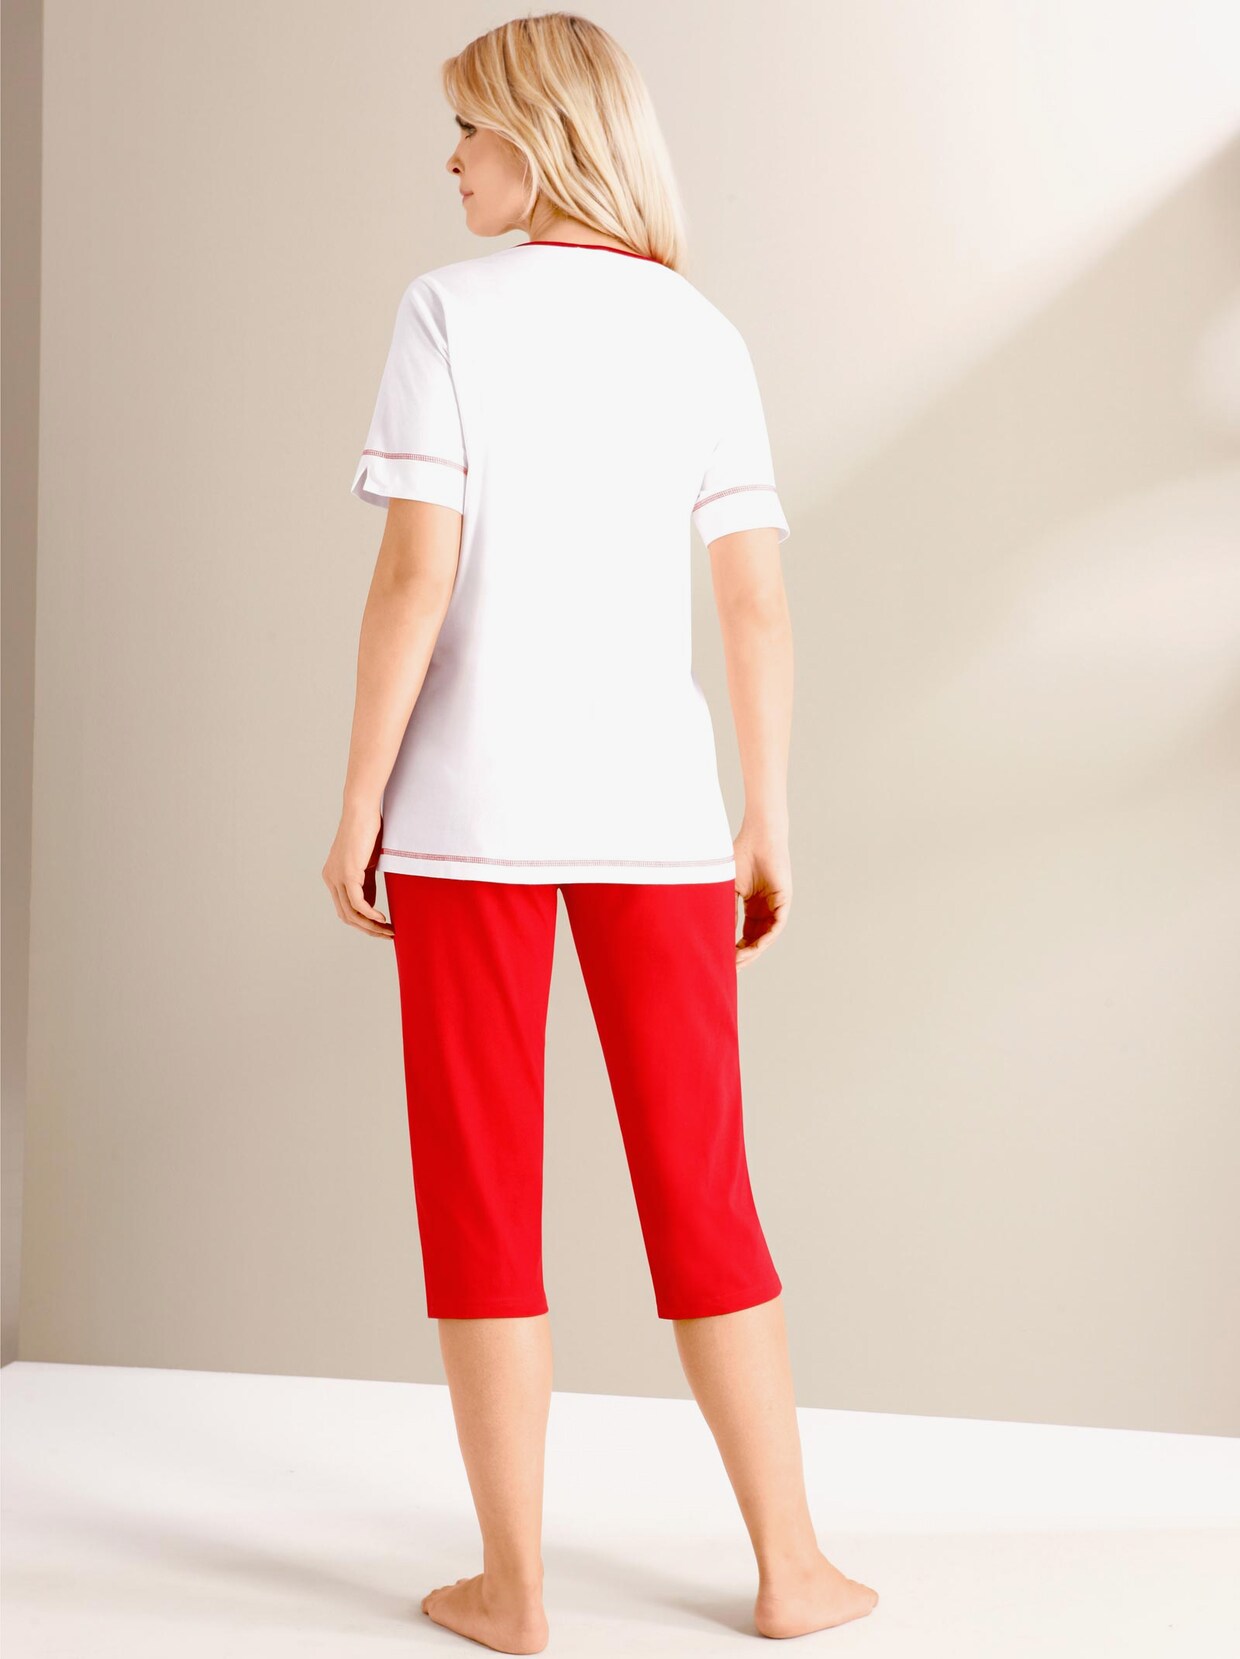 Capri-Schlafanzug - rot-weiß-bedruckt